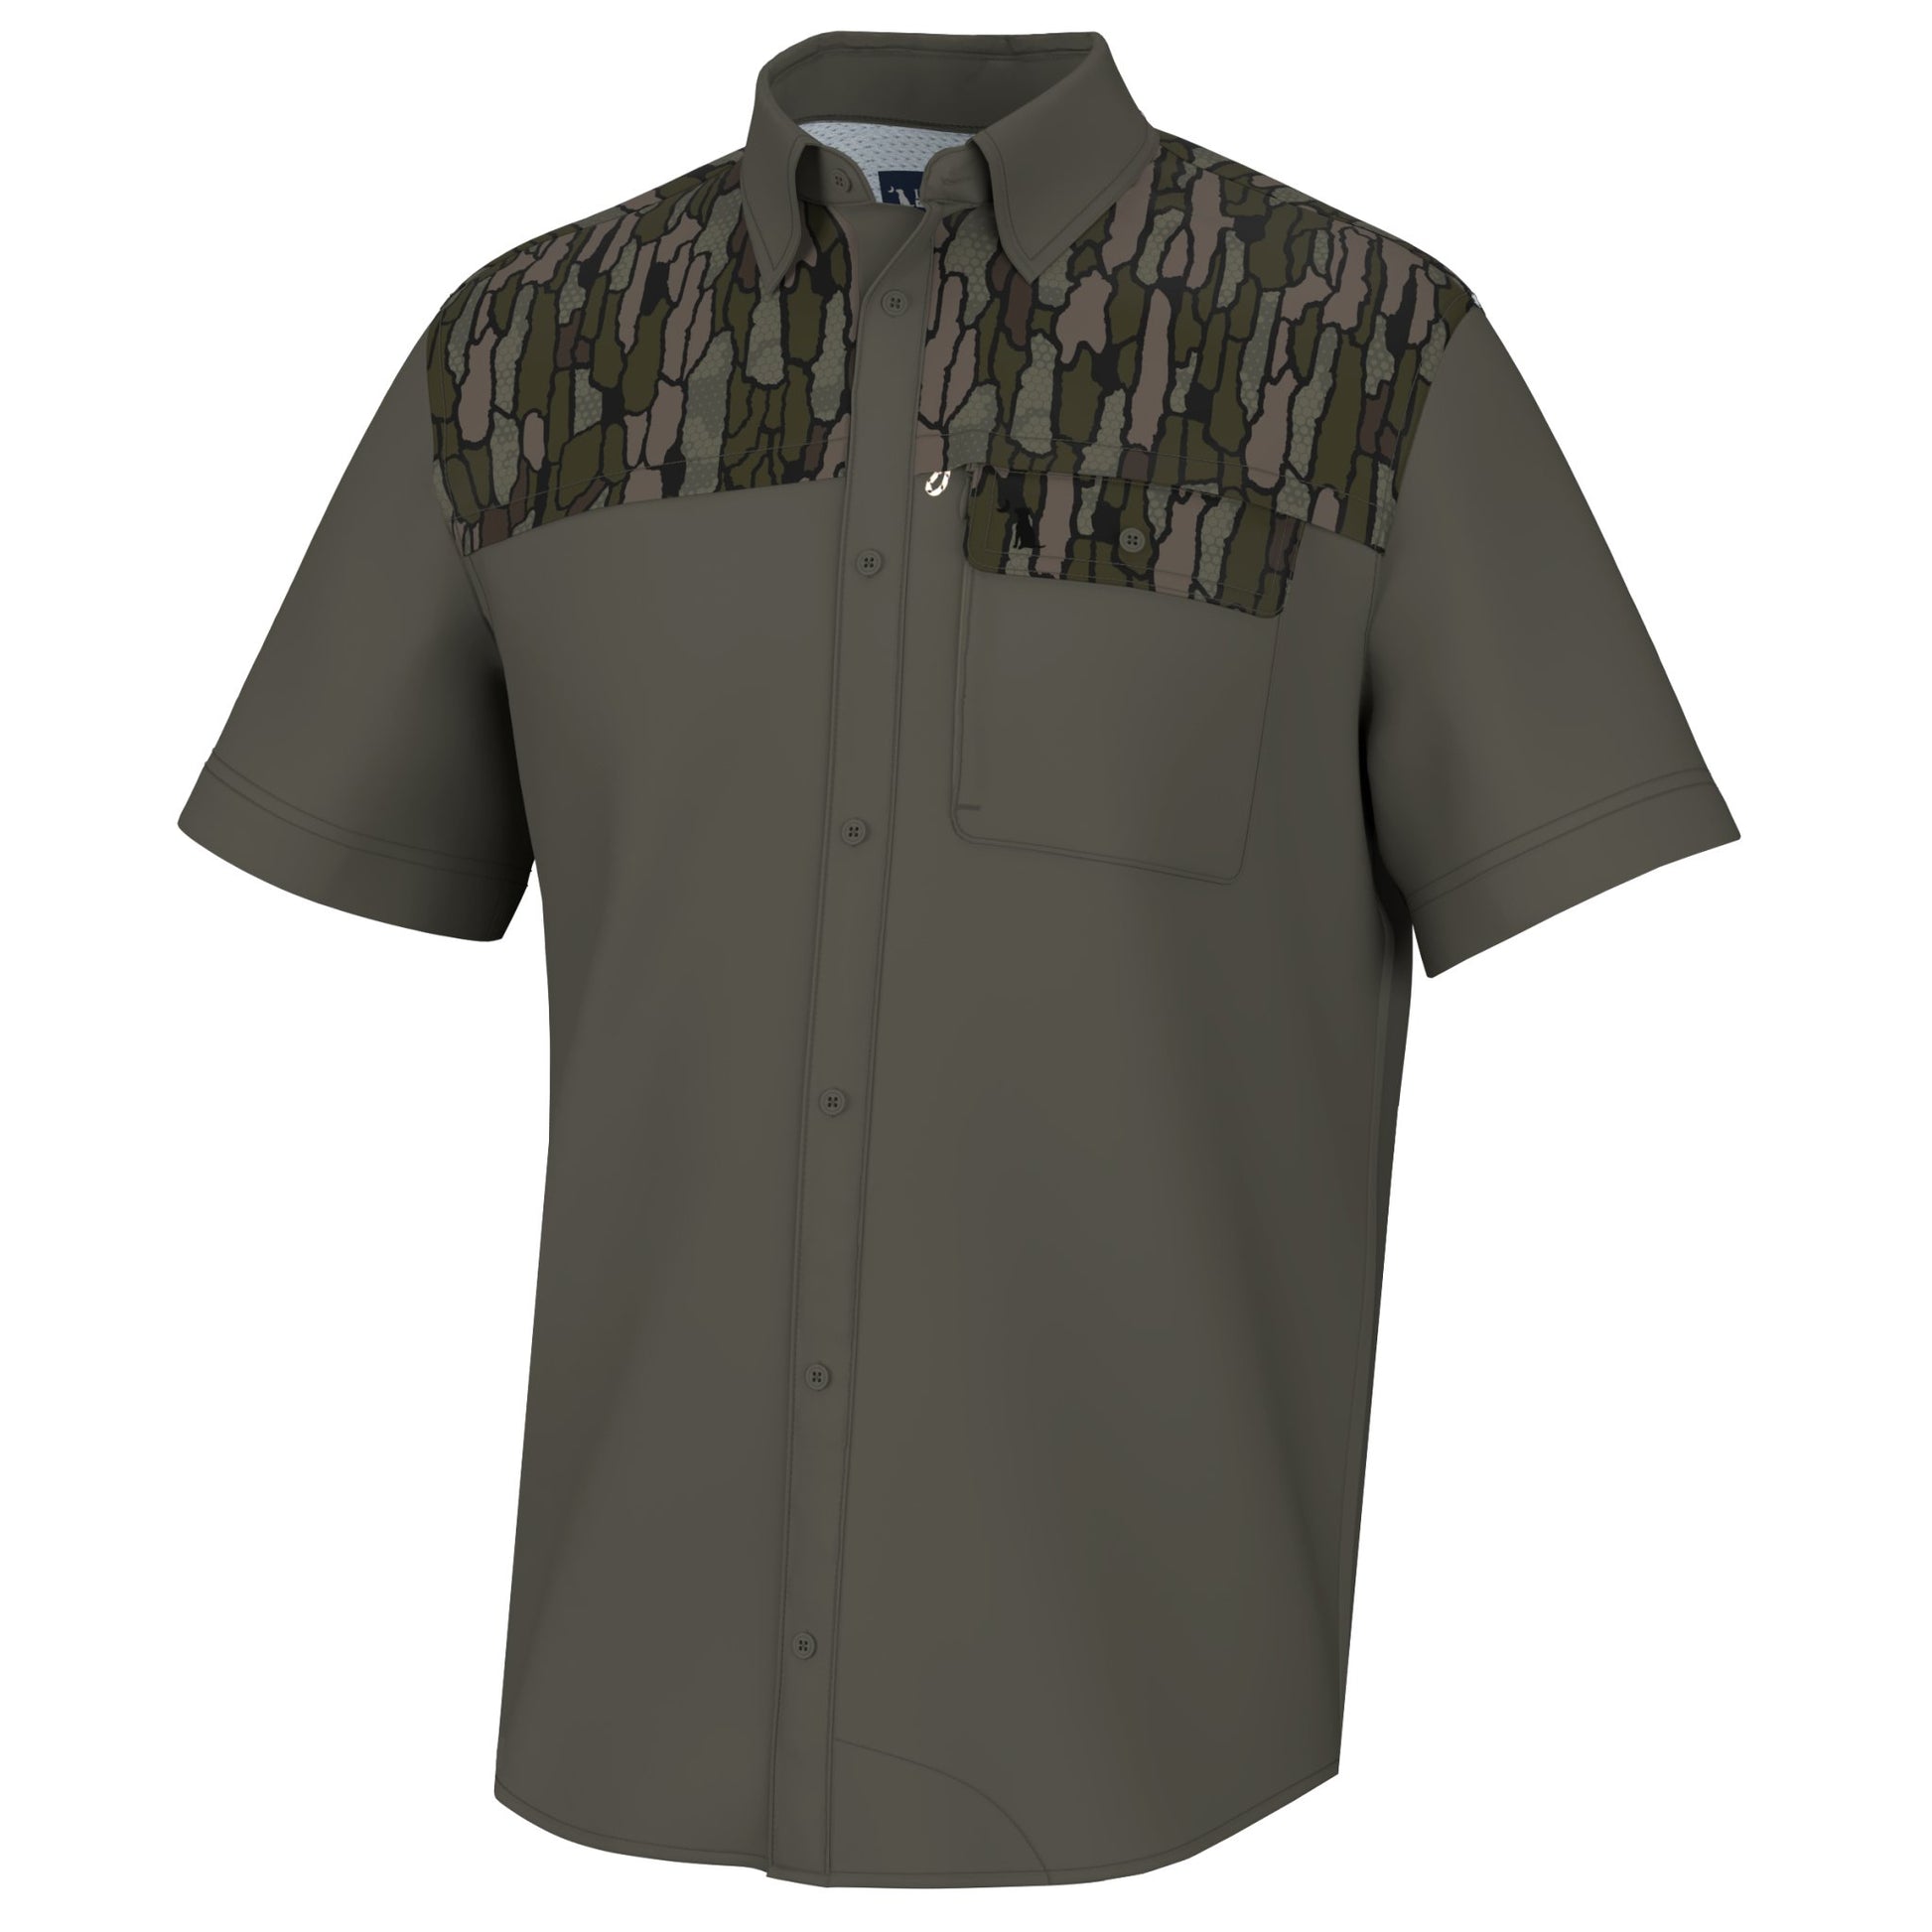 Seadation Angler Fishing Shirt- Localflage Timber/Olive - Mercantile213